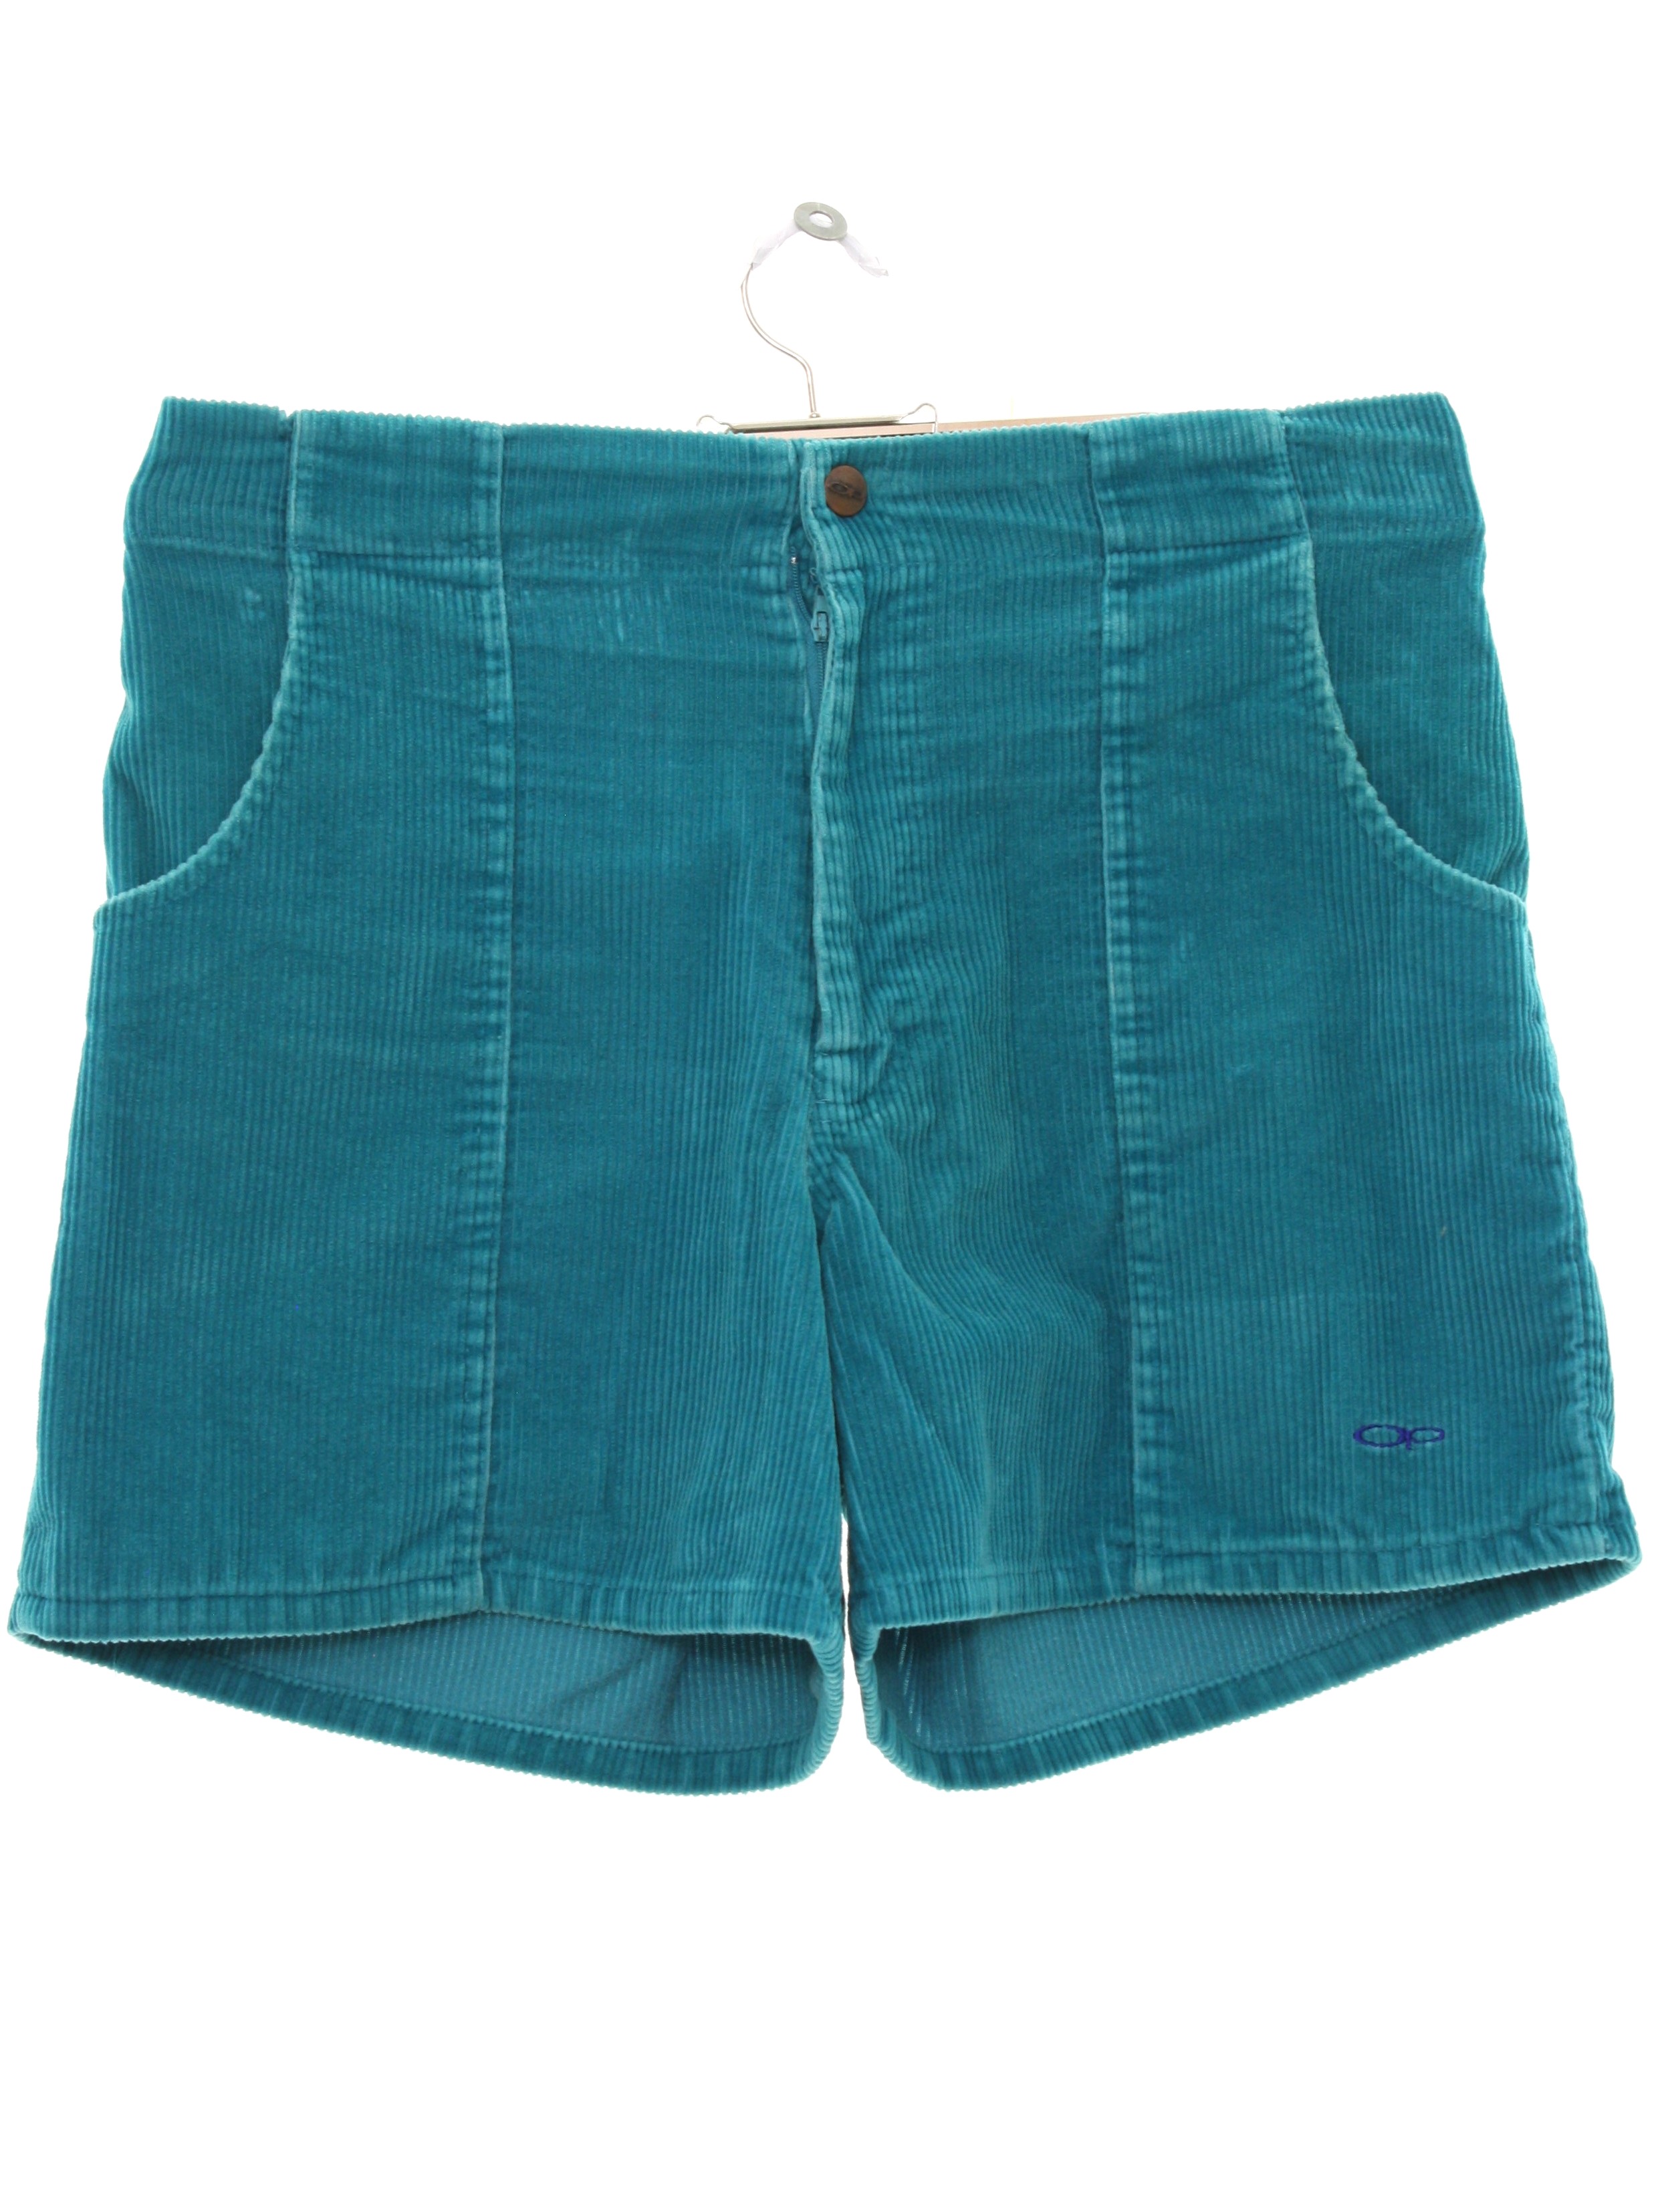 80s〜 OP corduroy shorts old オーシャンパシフィック | tspea.org